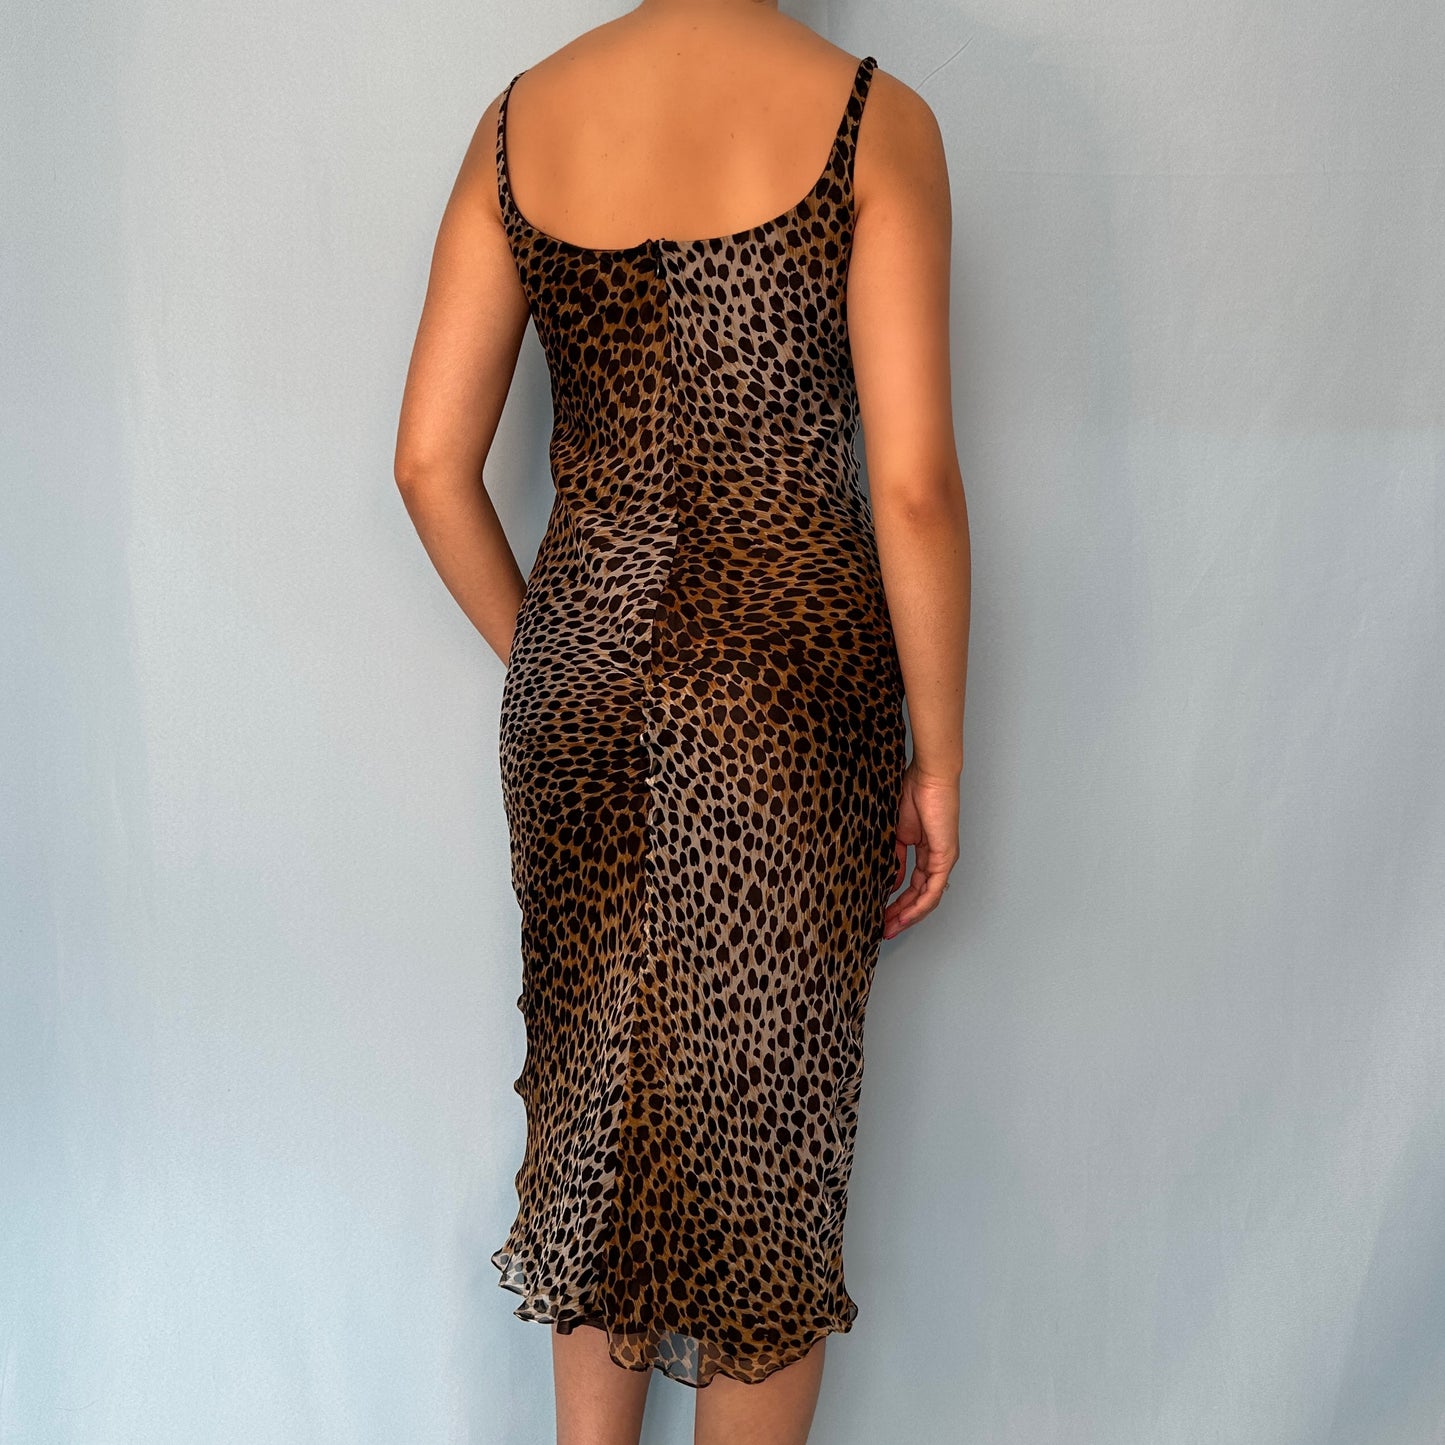 Dolce & Gabbana Spring 1996 Leopard Print Silk Chiffon Dress